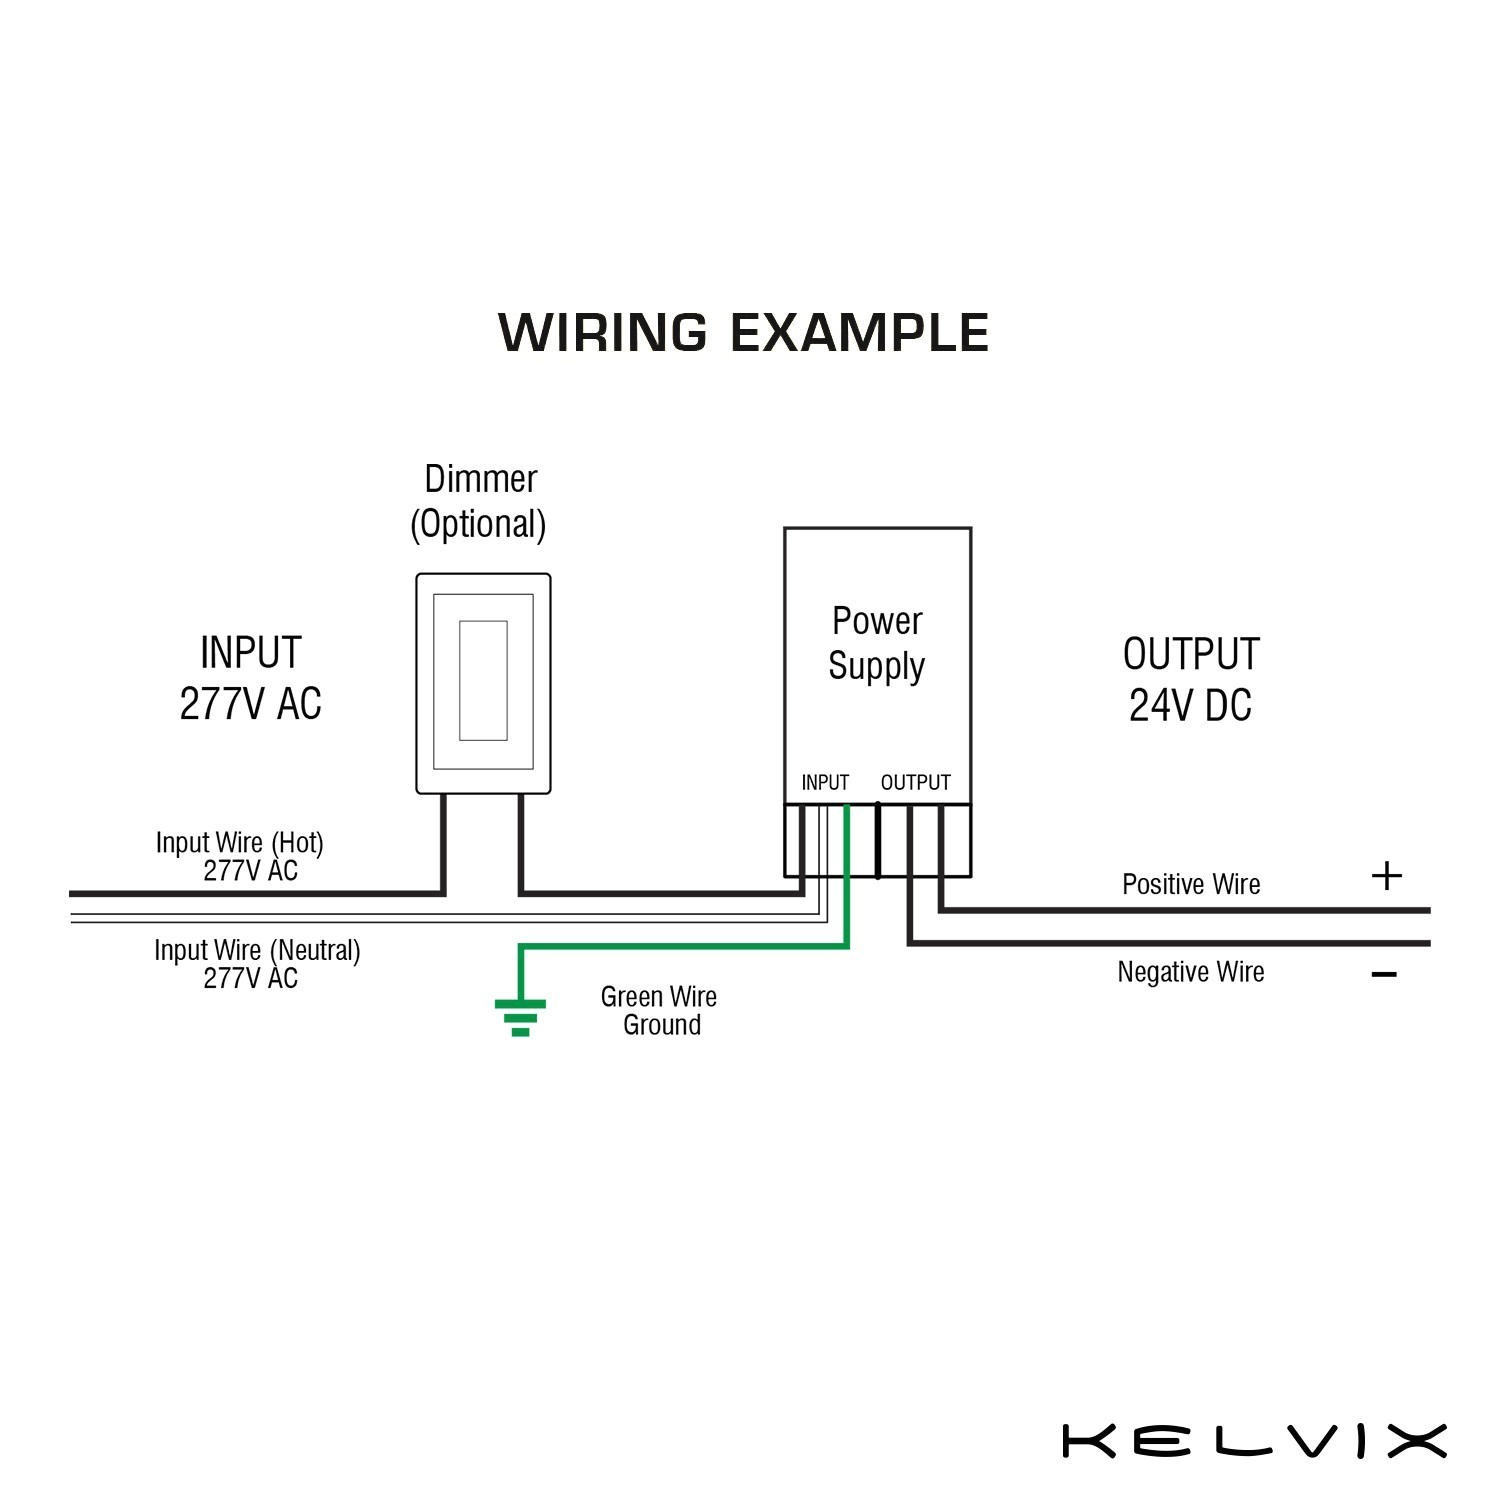 277 volt wiring diagram elegant 277 volt lighting wiring diagram elegant best 480 277v wiring of 277 volt wiring diagram in 277 volt wiring diagram jpg